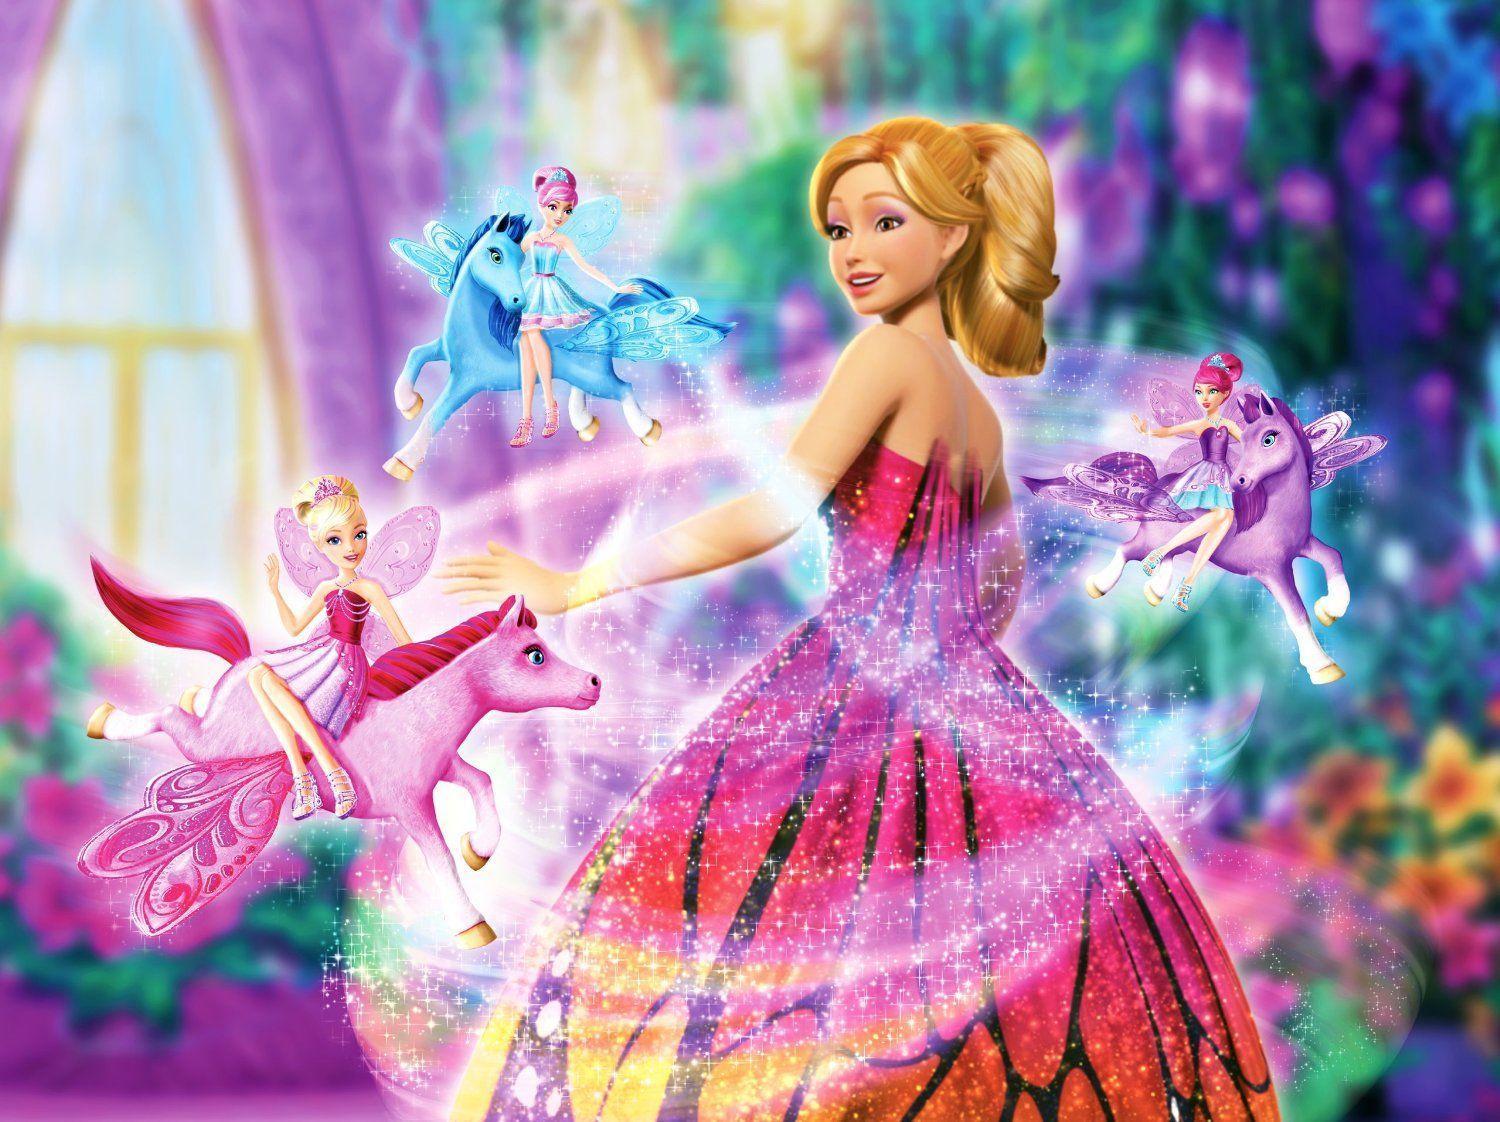 Barbie Mariposa and Fairy Princess new pic.: Mariposa